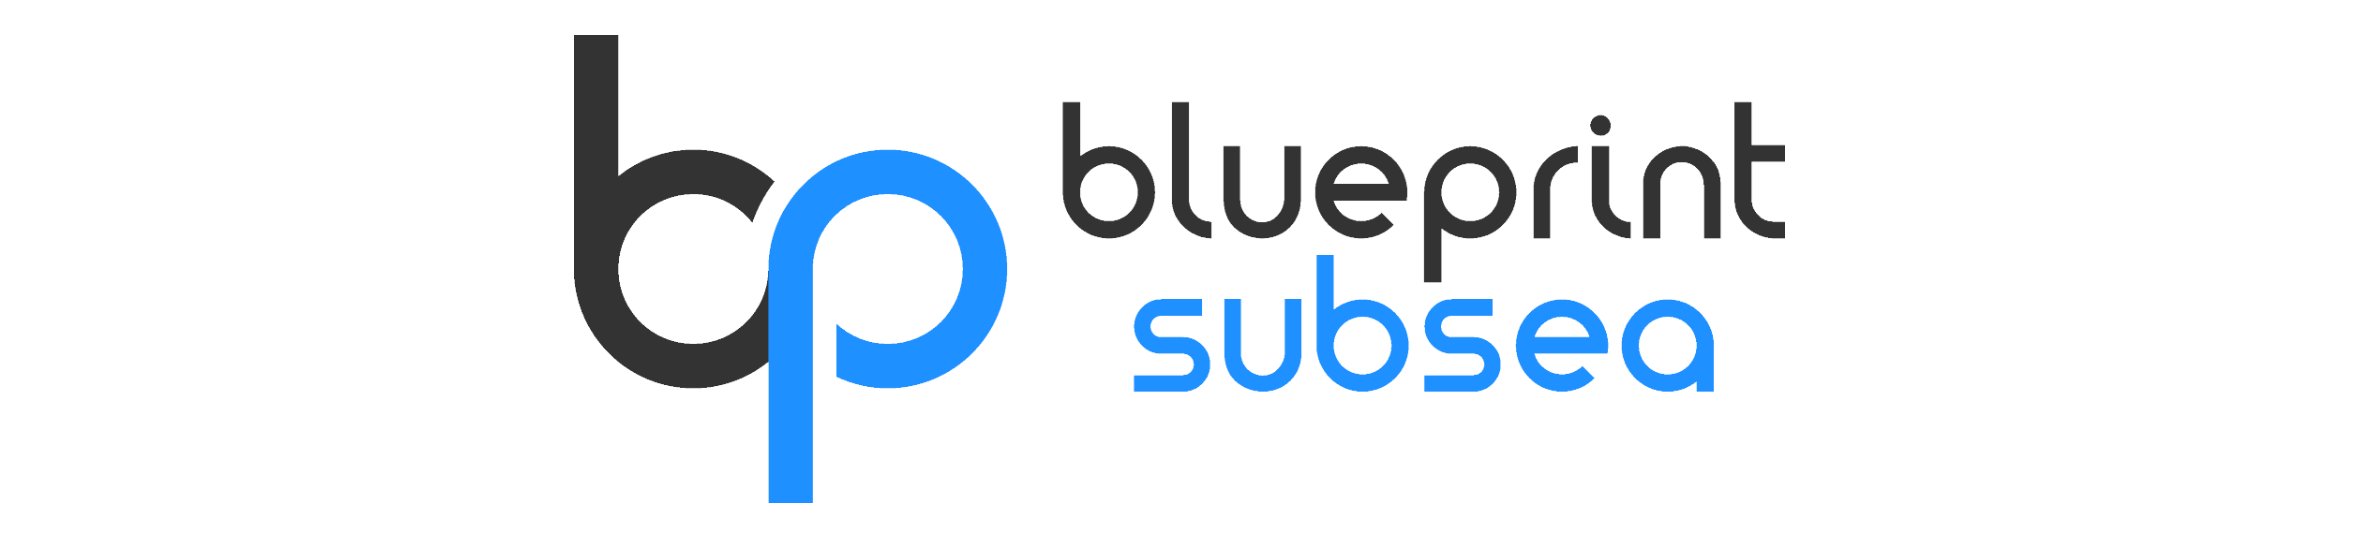 blueprintsubsea-logo.png